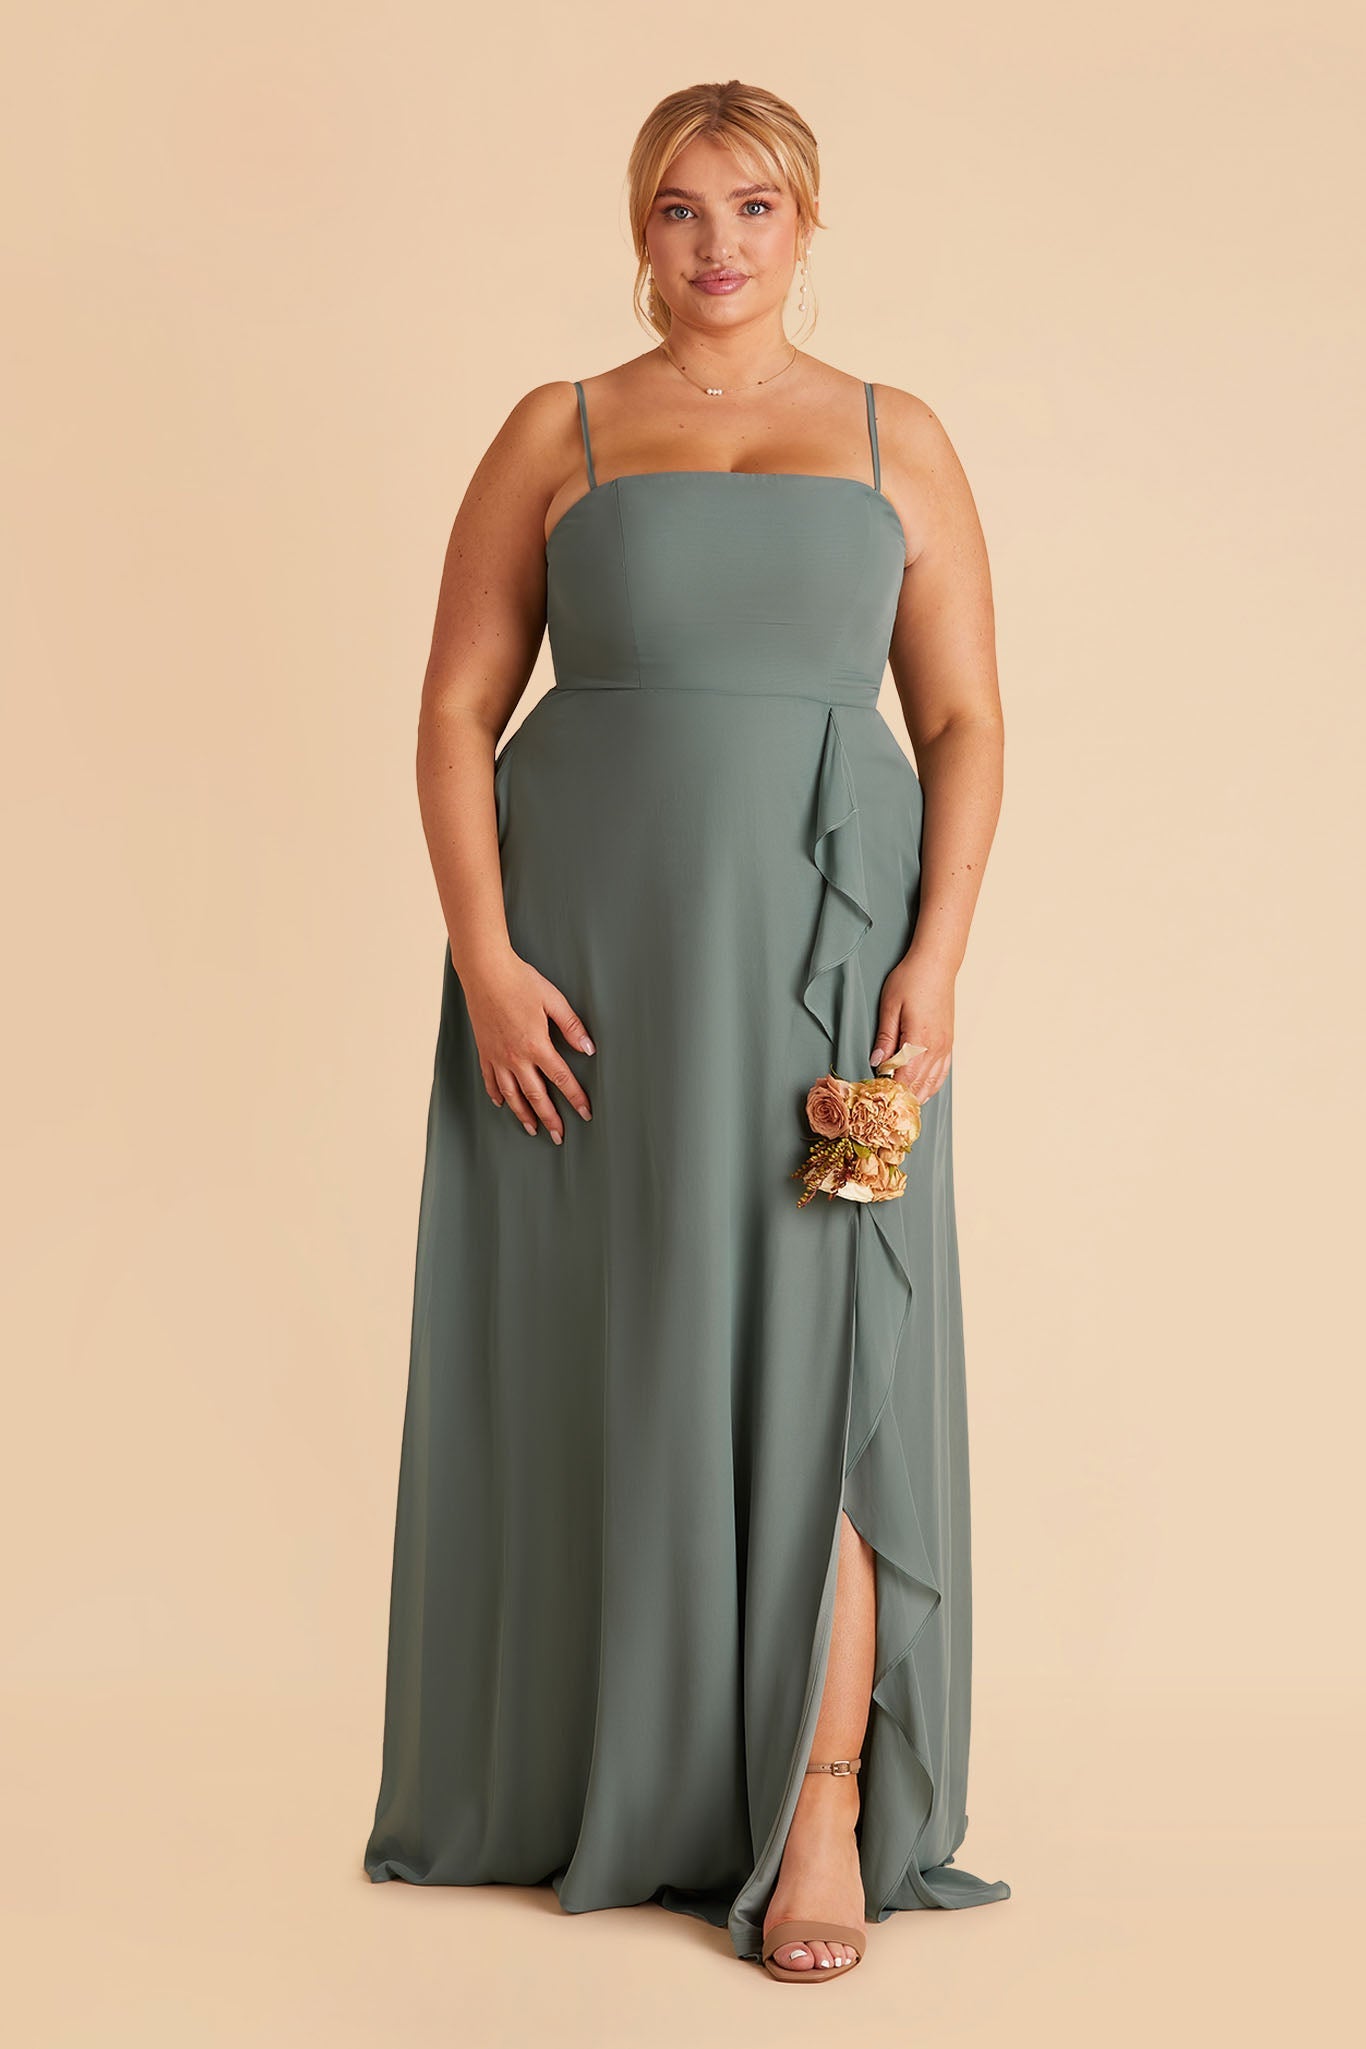 Winnie plus size bridesmaid dress with slit in sea glass chiffon by Birdy Grey, front view